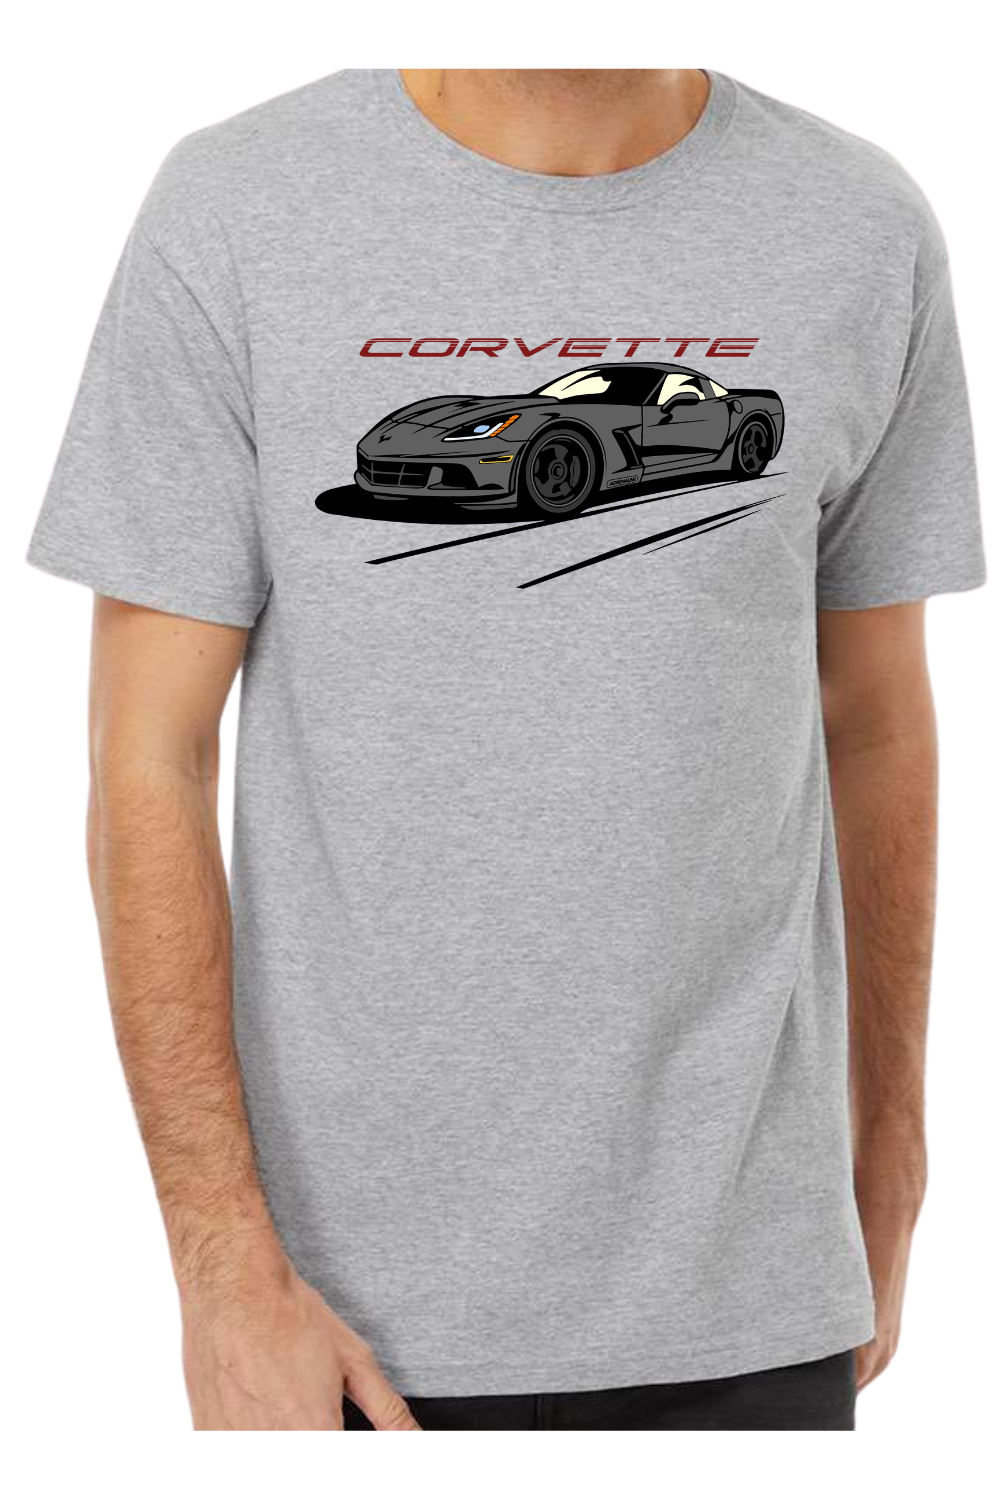 Corvette Unisex Tshirt